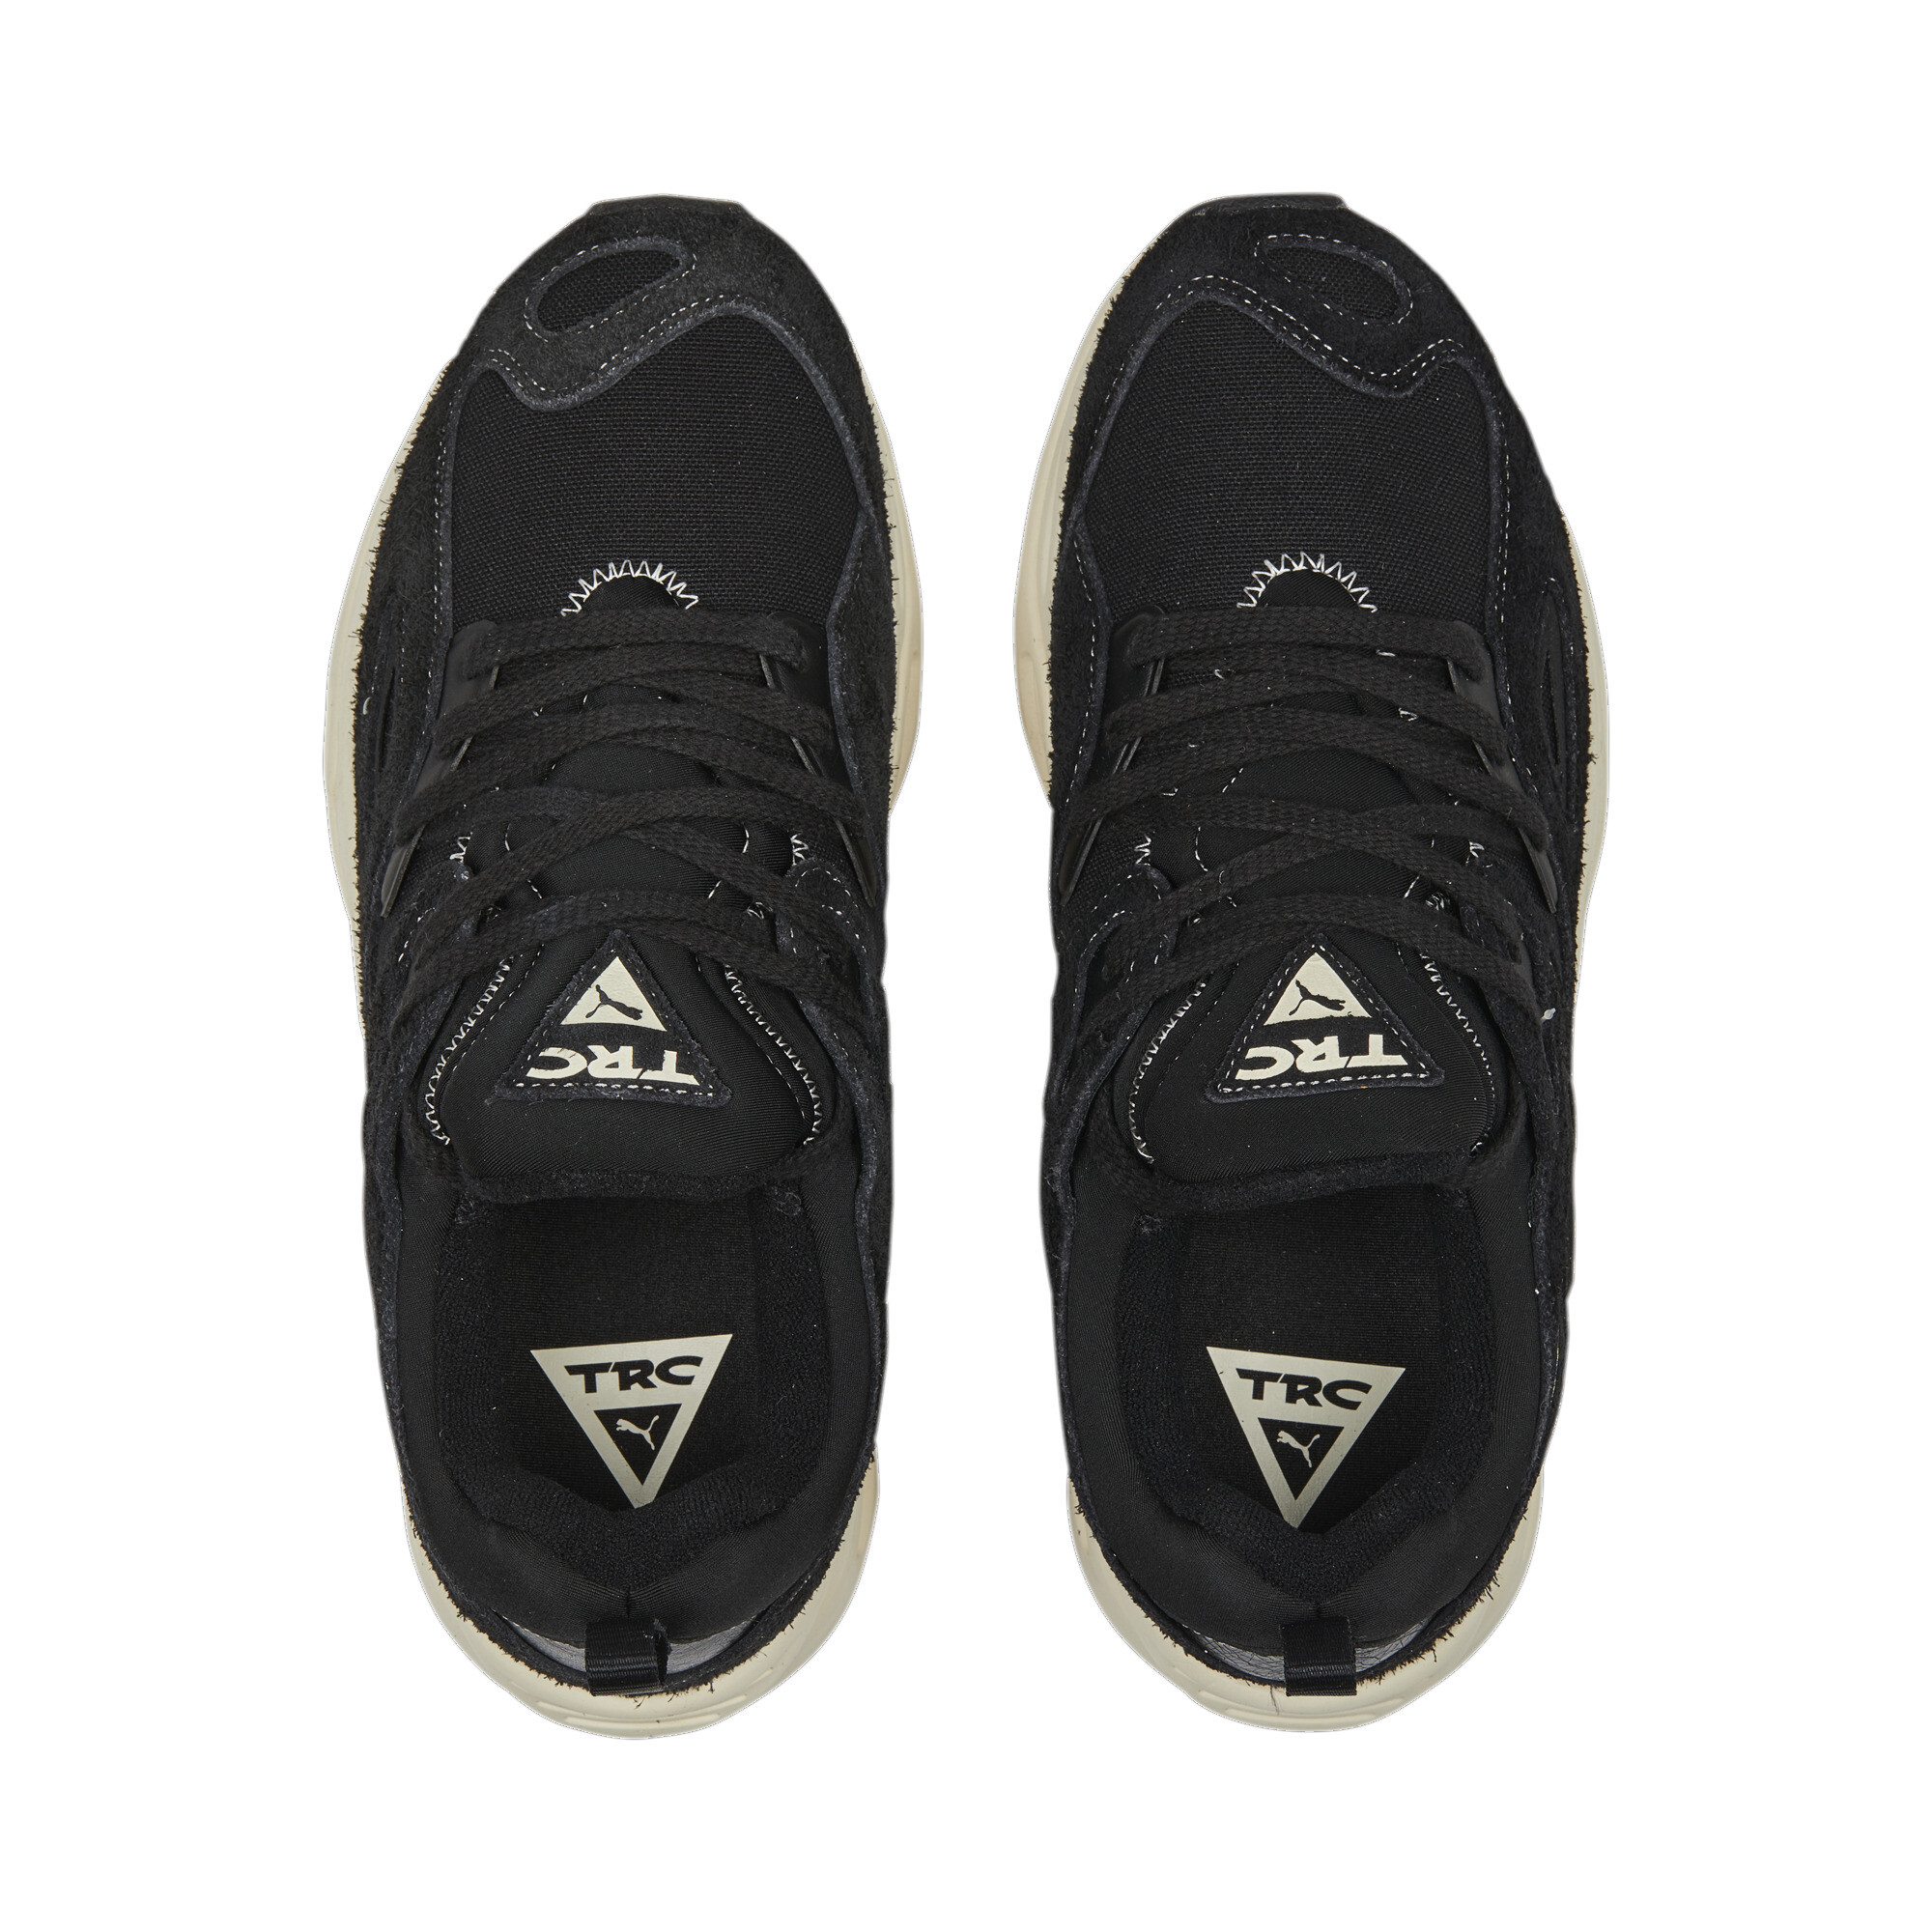 Men's PUMA TRC Blaze Worn Out Sneakers In 10 - Black, Size EU 42.5